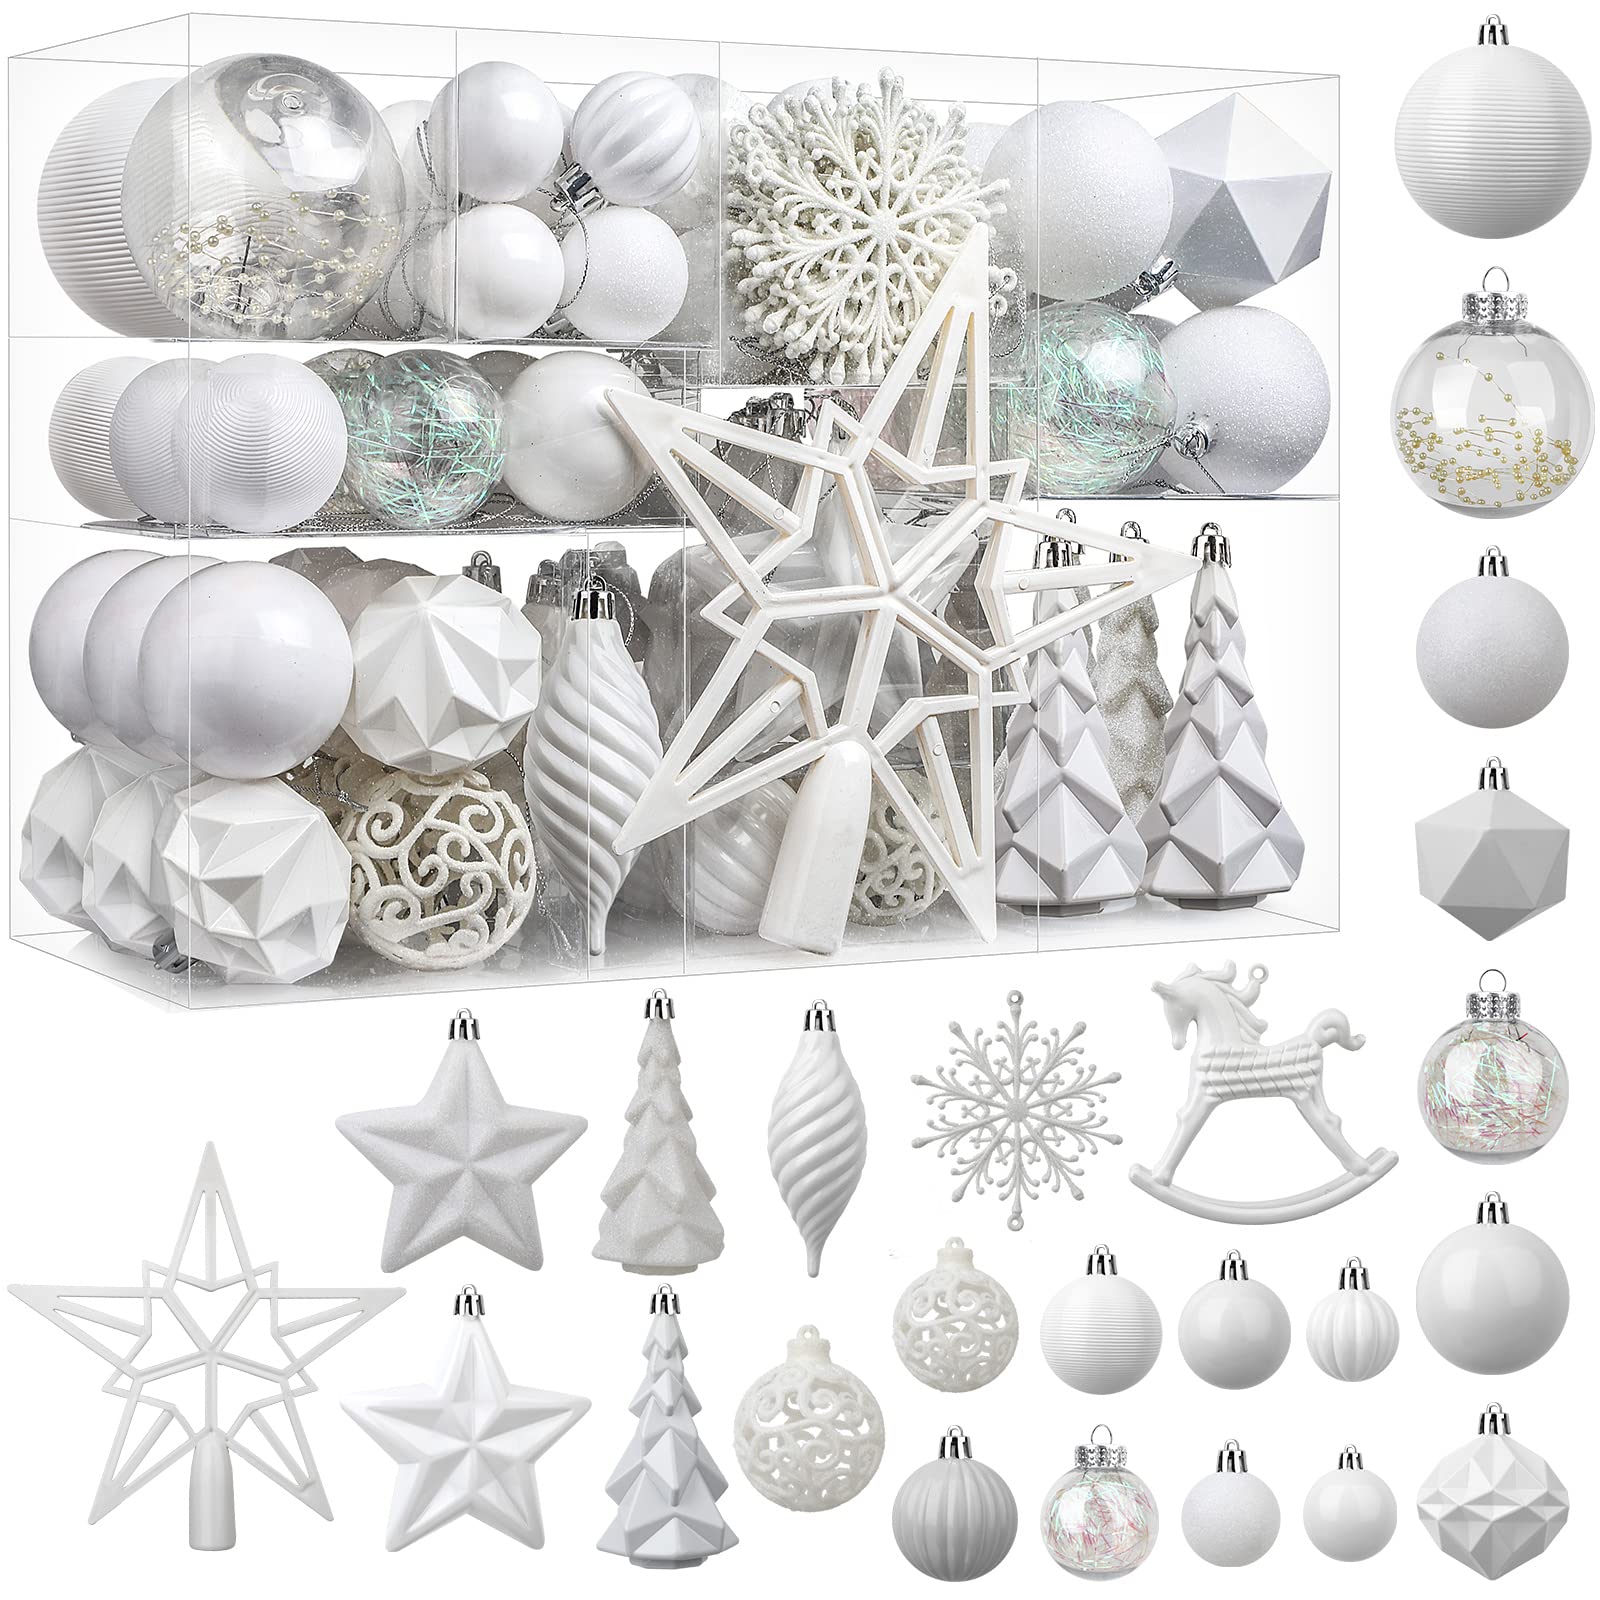 SHareconn christmas Balls Ornaments Set,Shatterproof Plastic Decorative Baubles for Xmas Tree Decor Holiday Wedding Party Decora